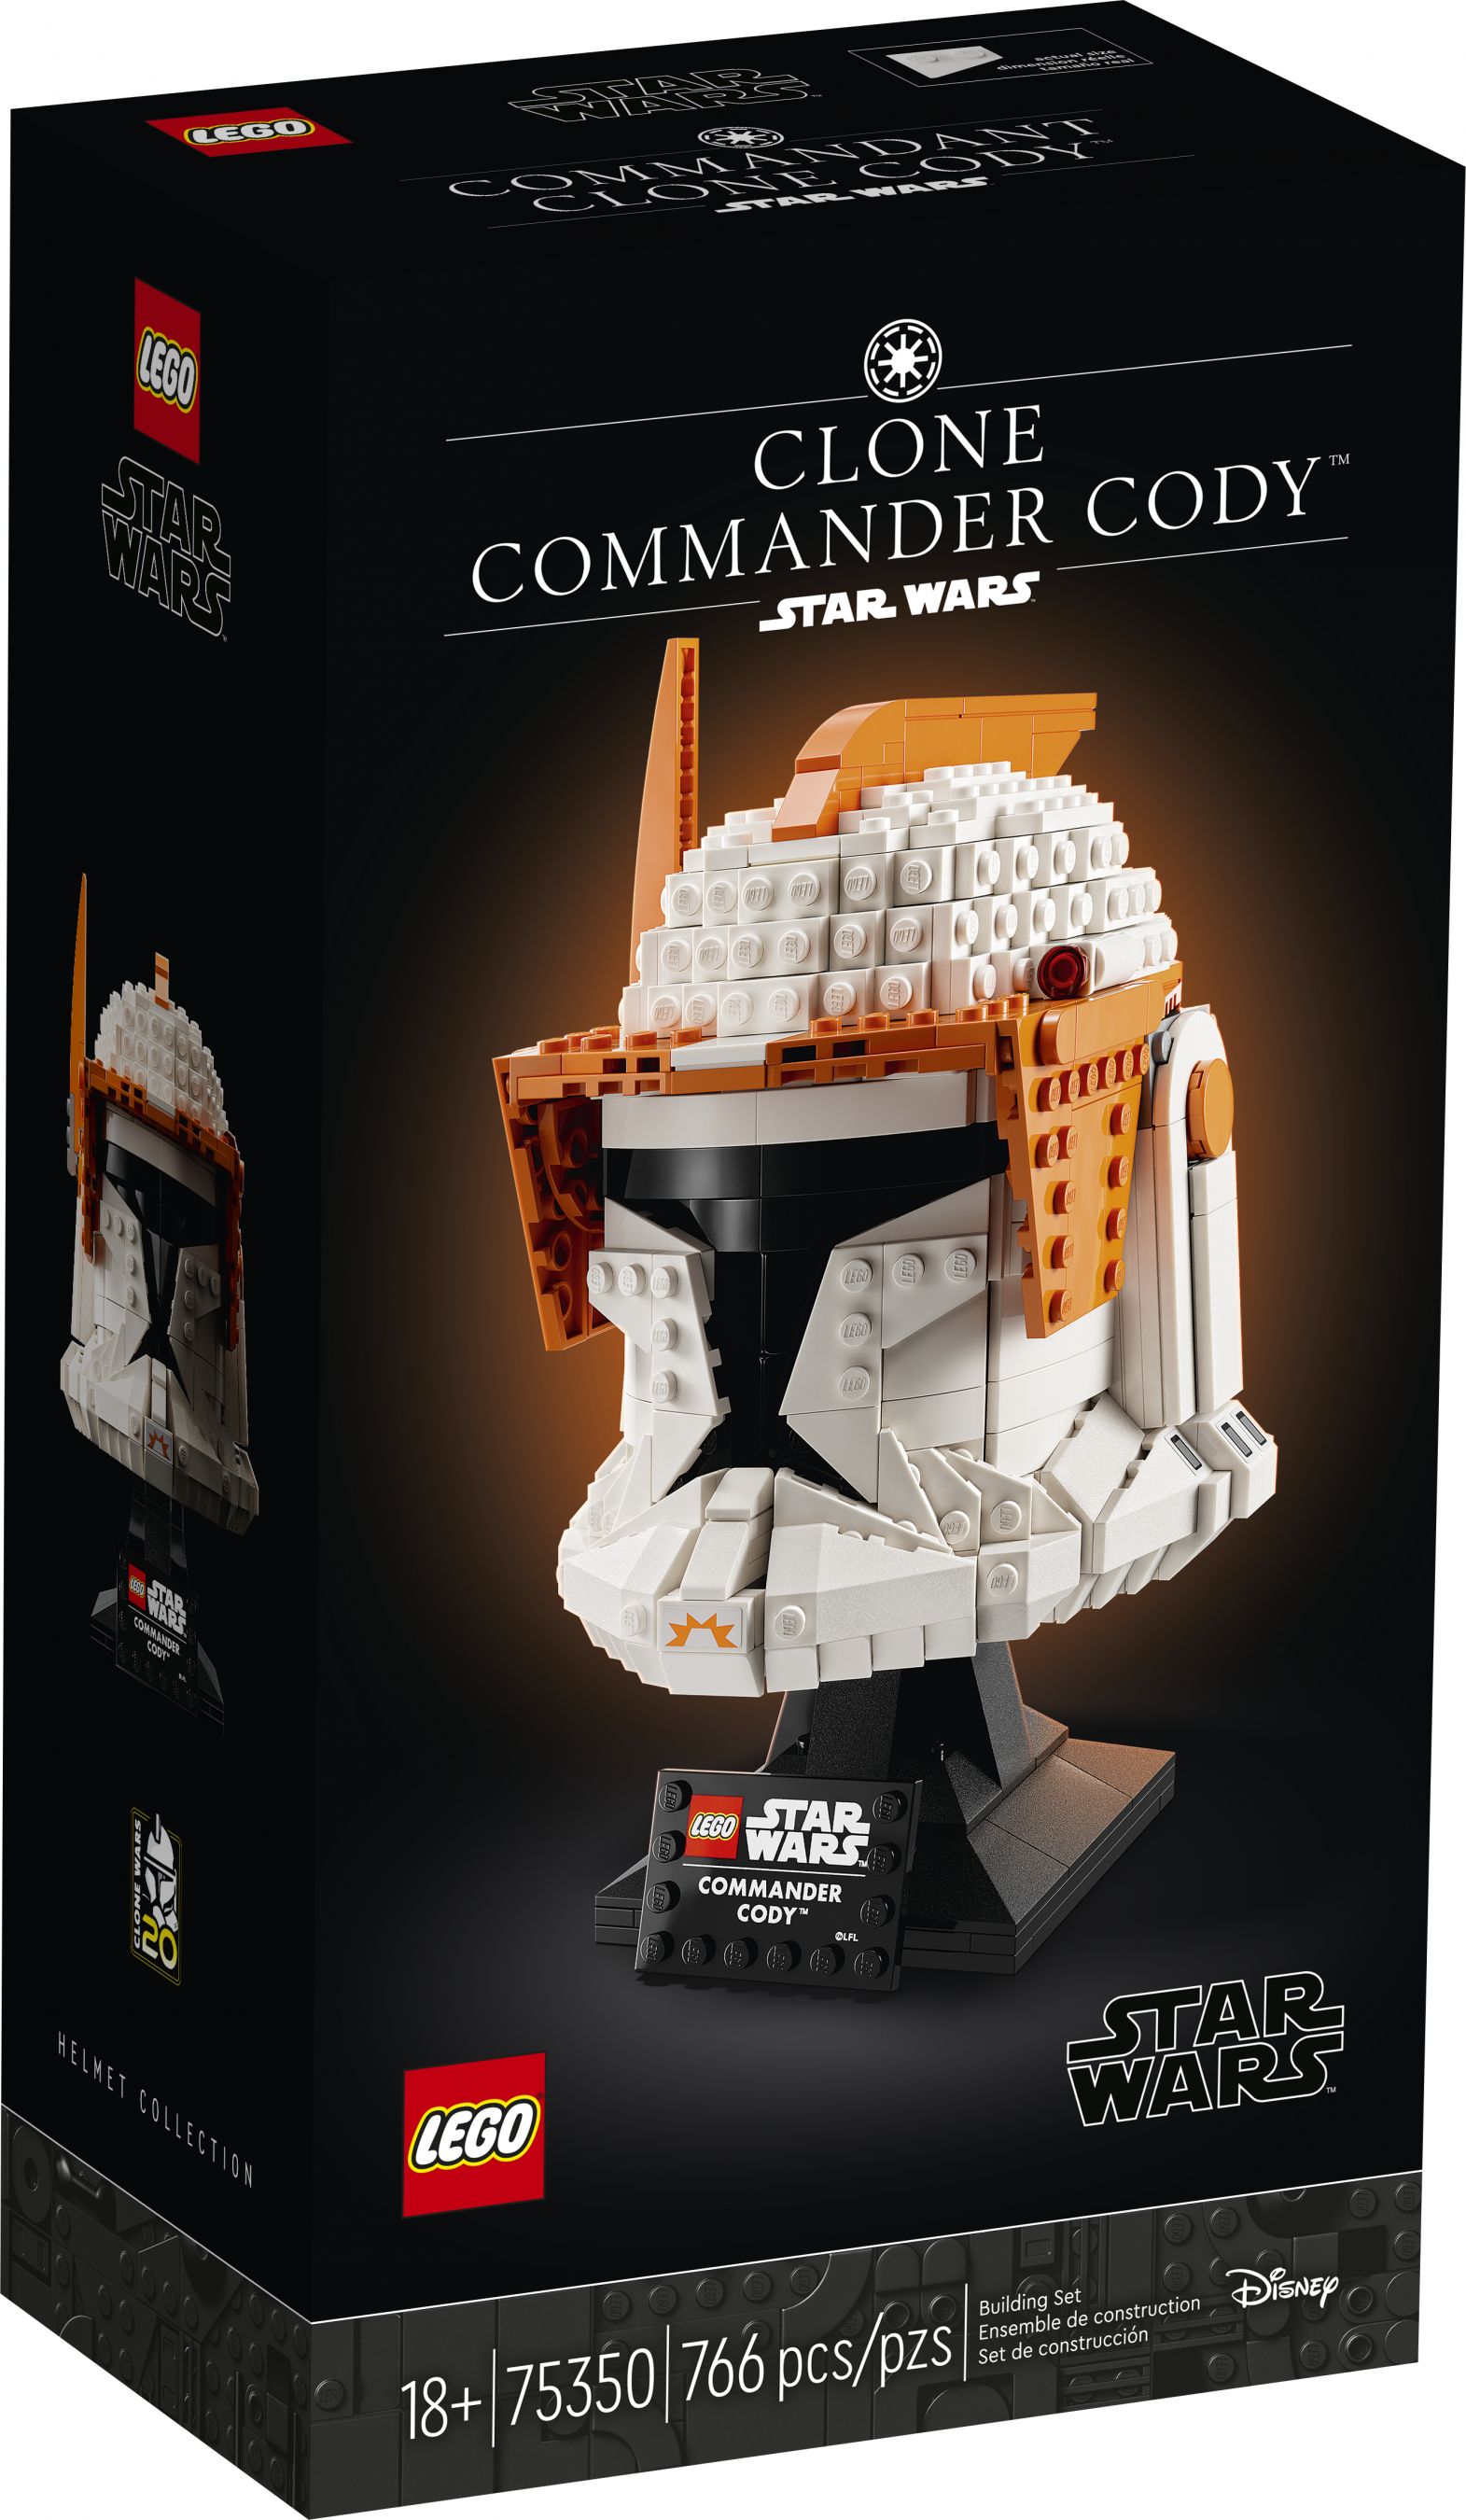 LEGO Star Wars 75350 Clone Commander Cody™ Helm LEGO_75350_Box1_v39.jpg